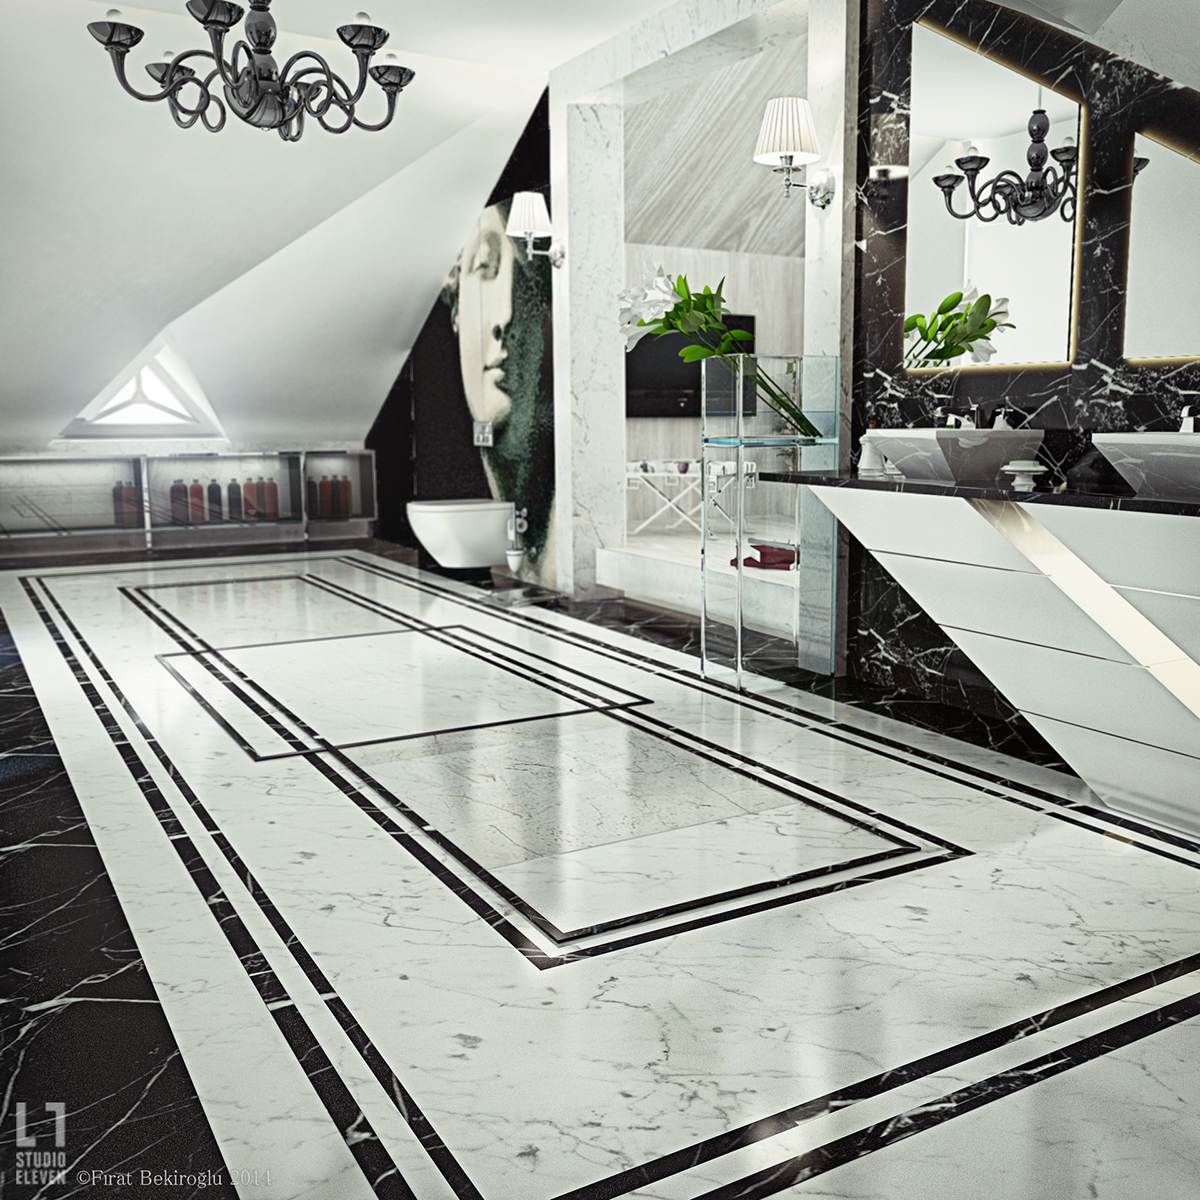 bathroom design console bizassa interiordesign design Marble 3dsmax vray photoshop Render Interior Architect içmimar Fırat Bekiroğlu furniture